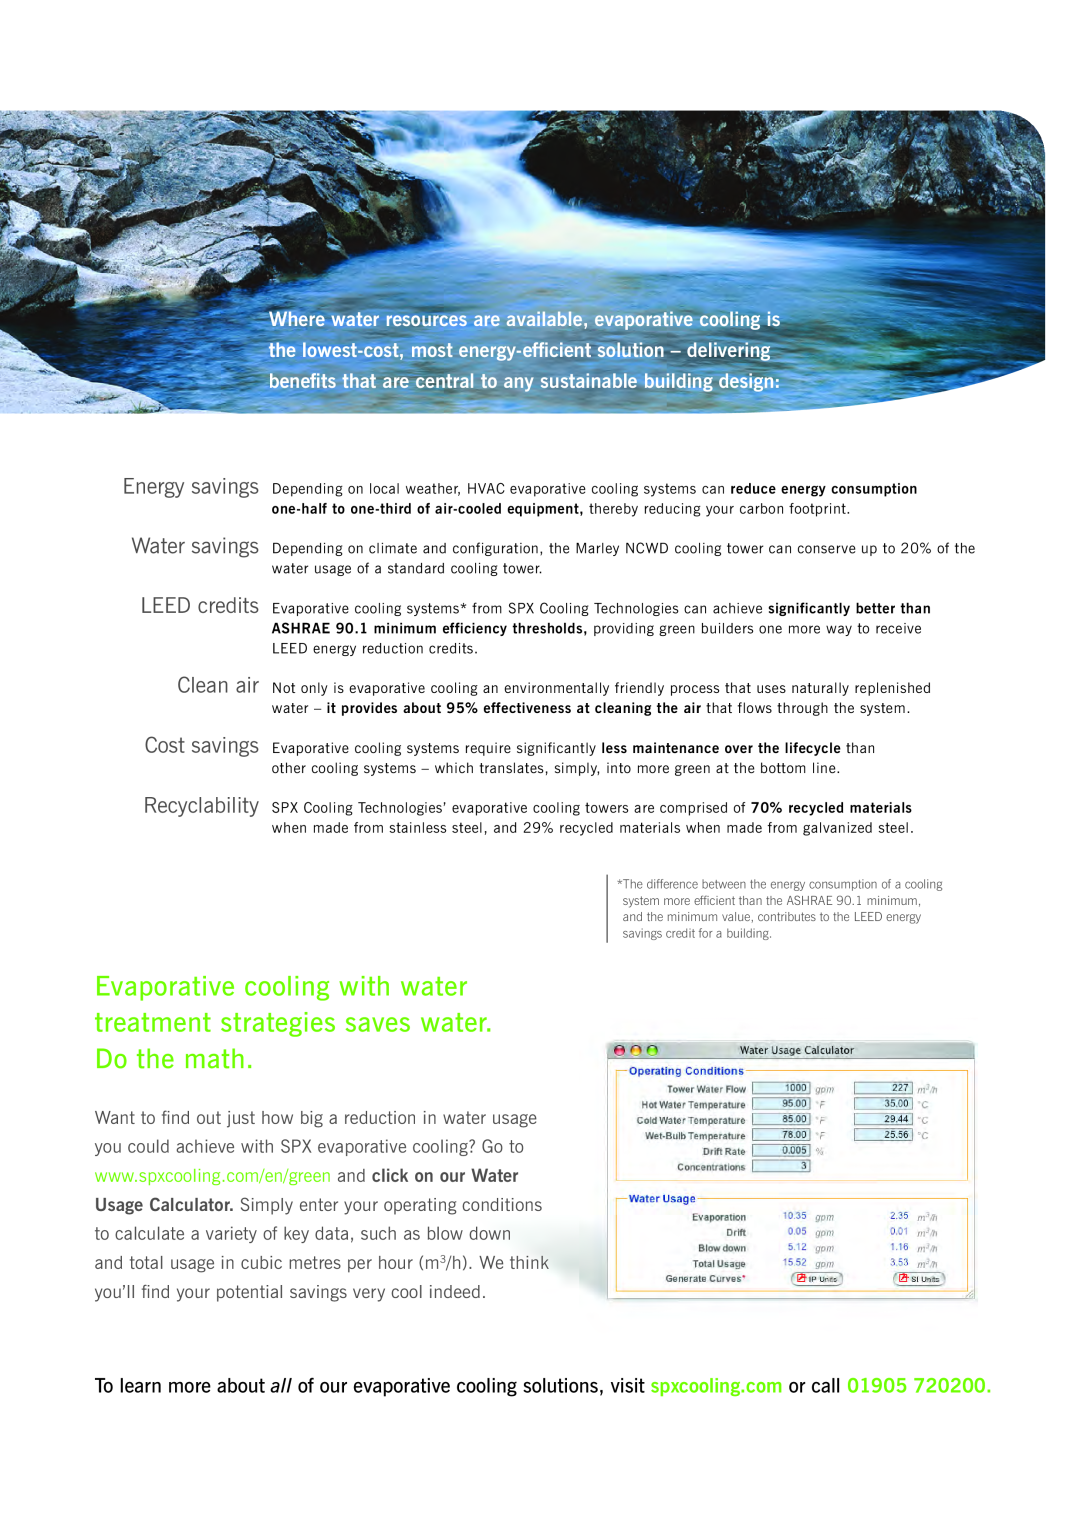 SPX Cooling Technologies Evaporative Cooling manual Energy savings Water savings LEED credits 